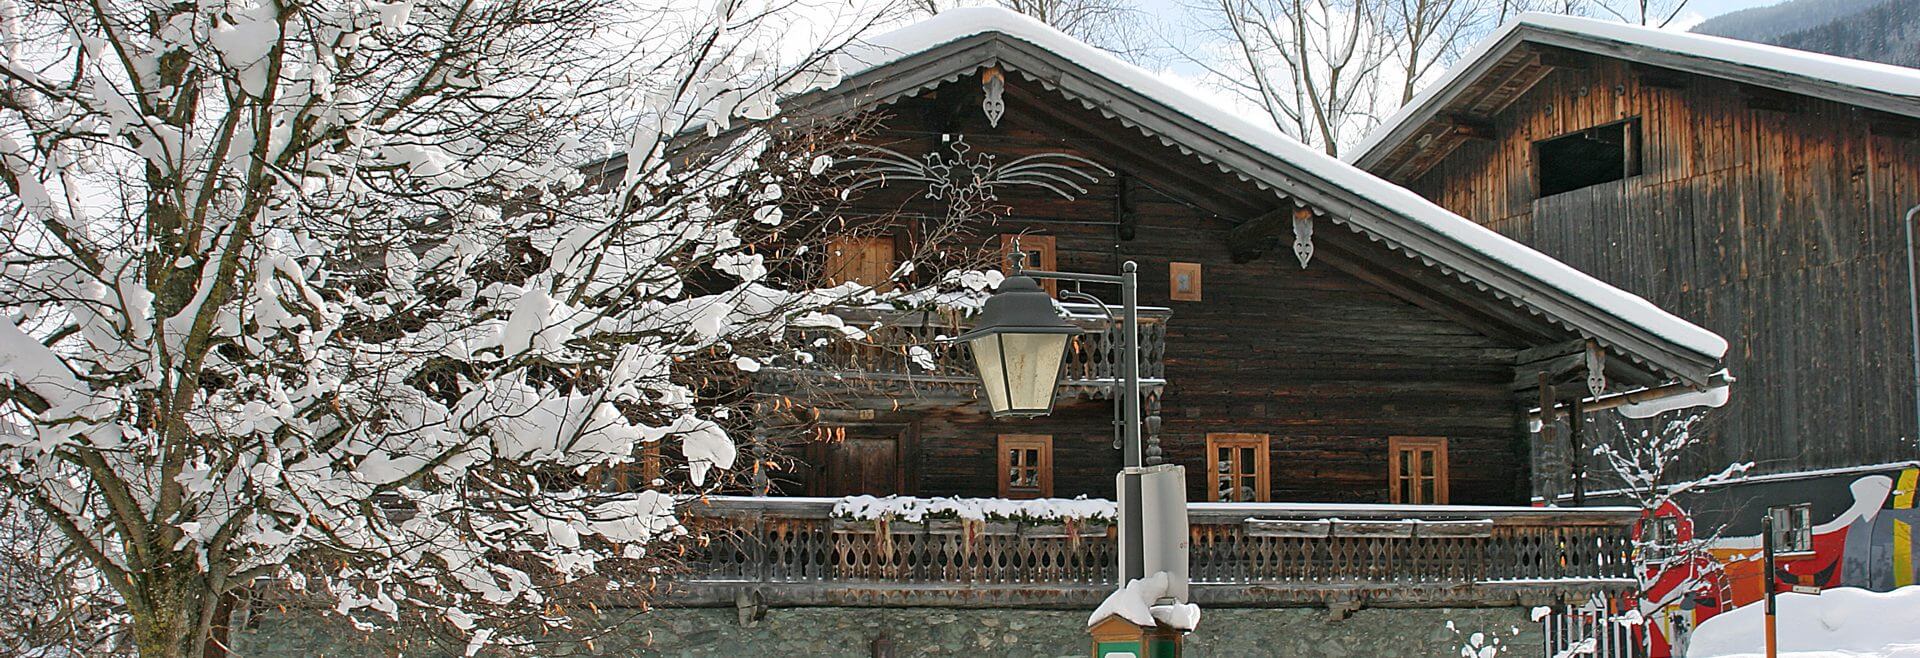 Klausnerhaus in Hollersbach im Winter